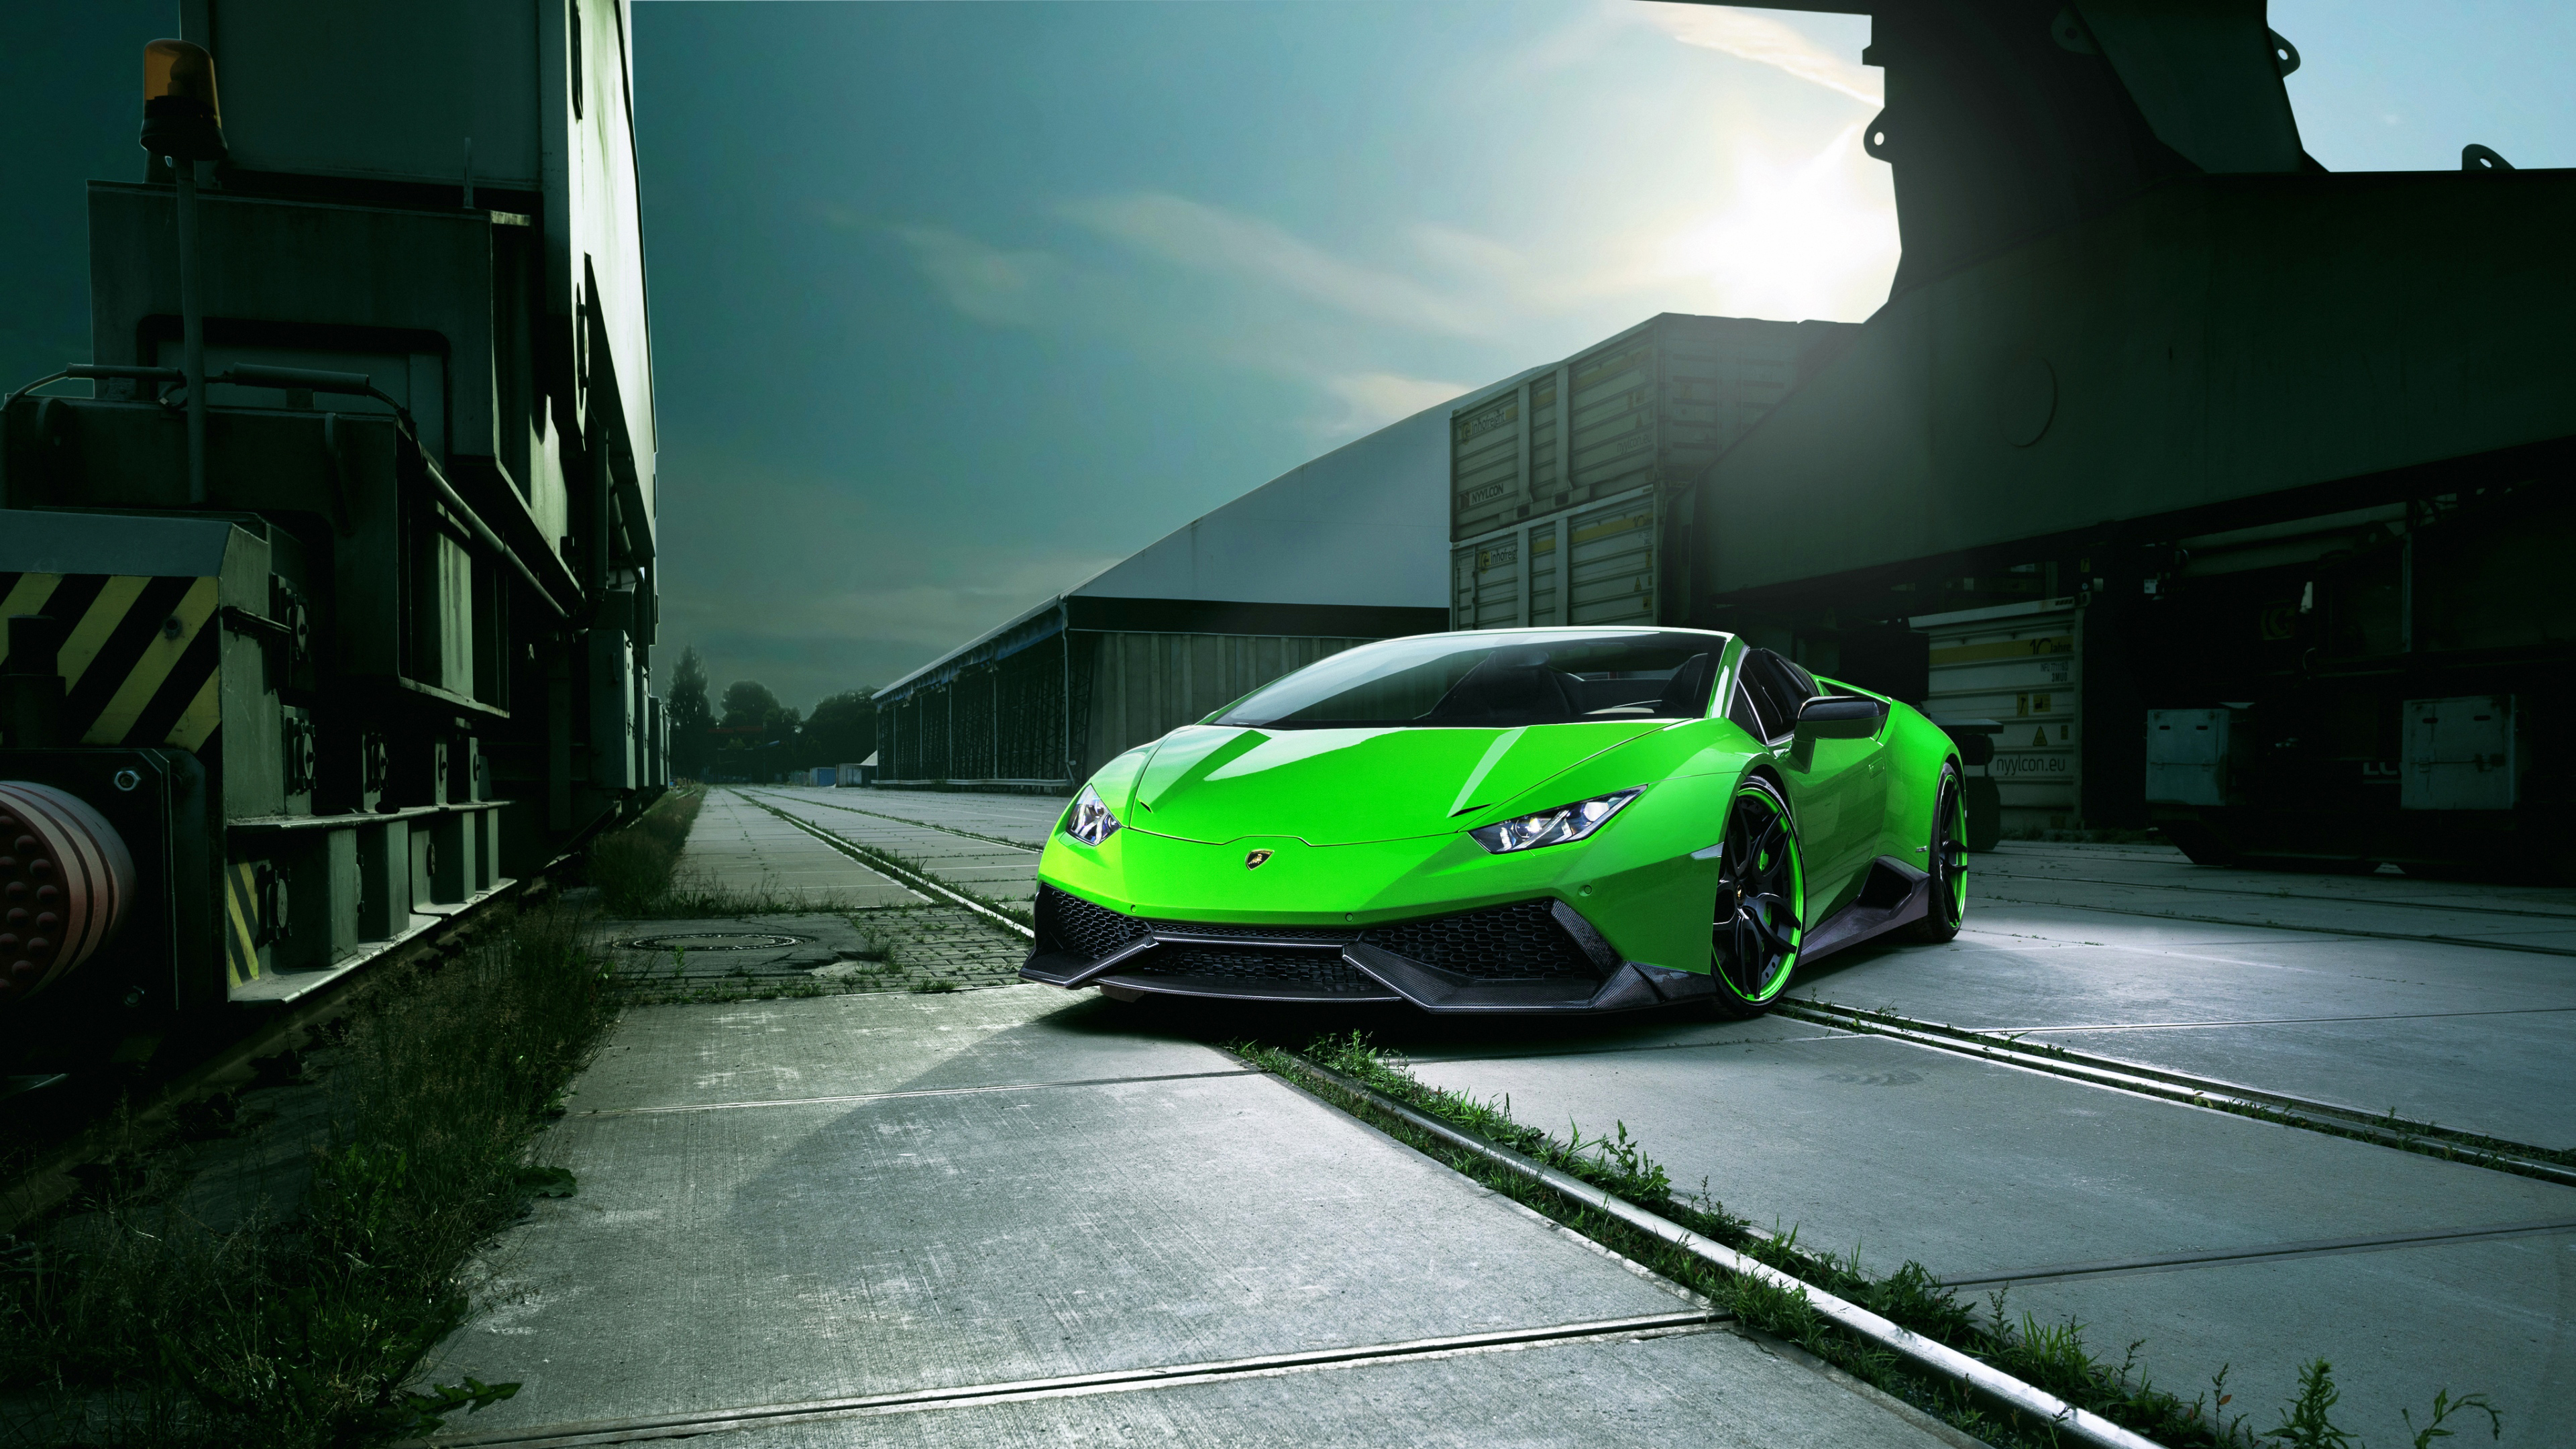 Descargar fondos de escritorio de Lamborghini Huracán Rwd Spyder HD